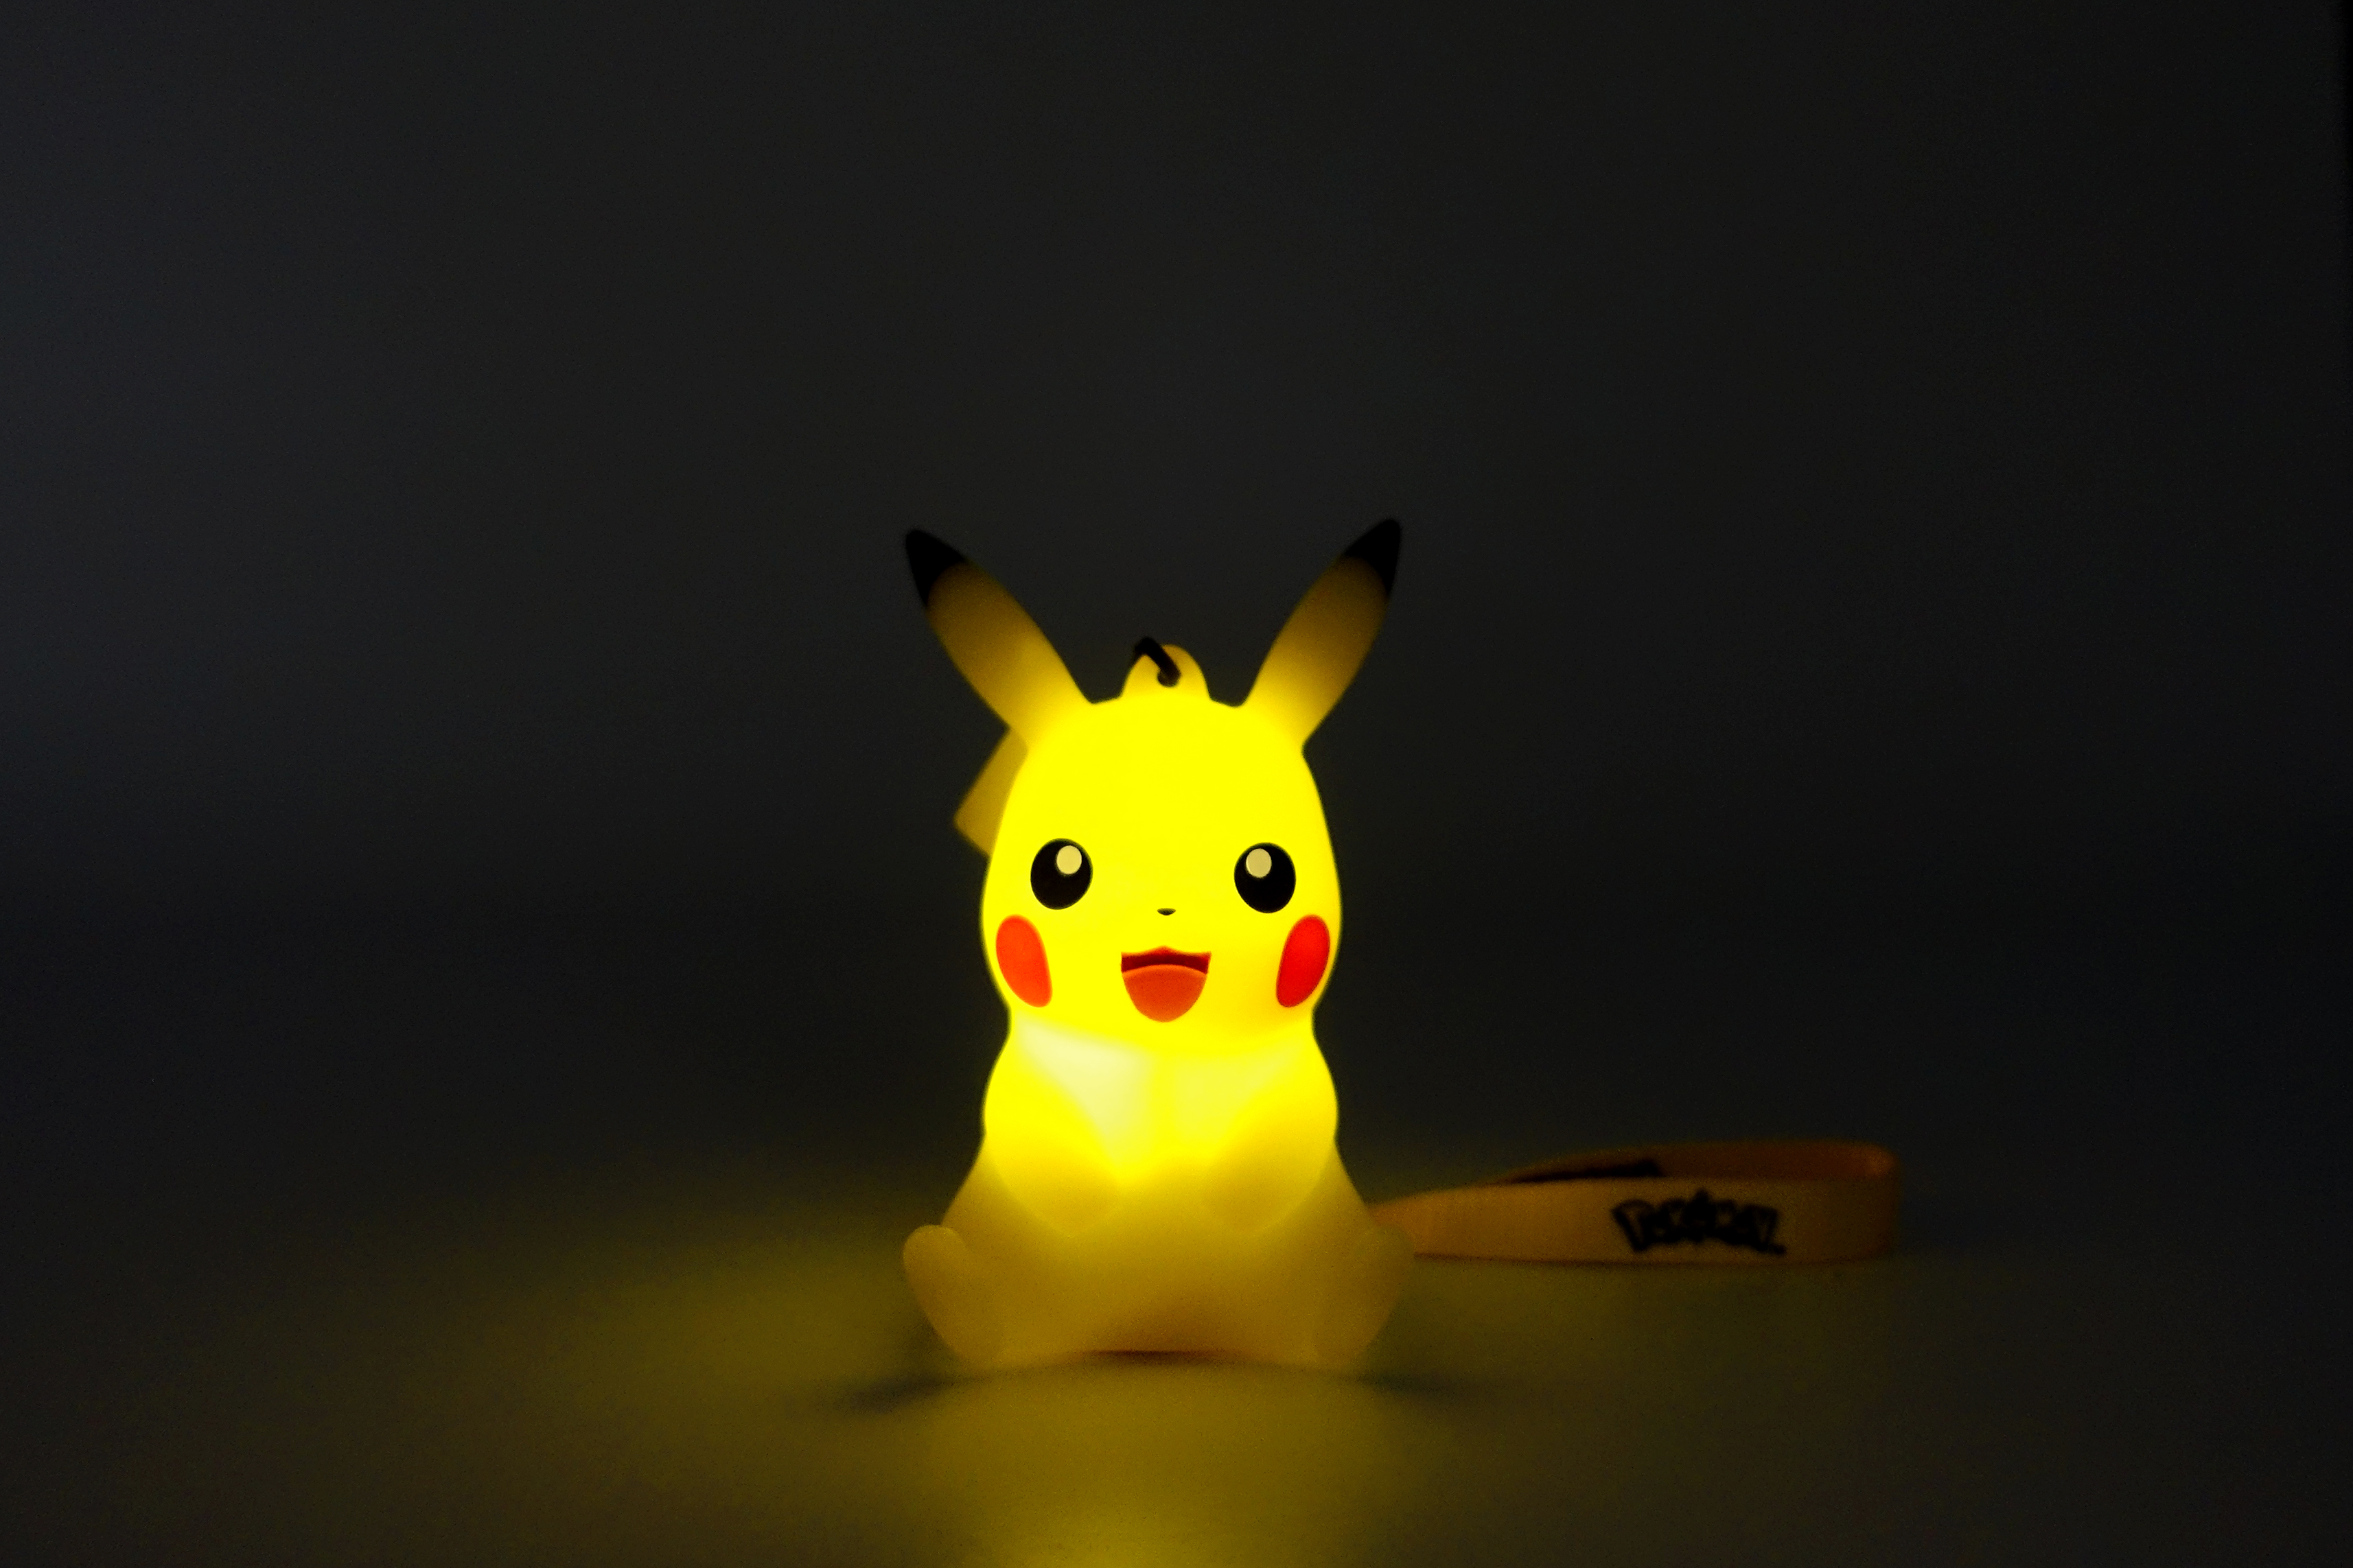 Teknofun Pokémon - Pikachu prívesok svietiaca figúrka 8cm